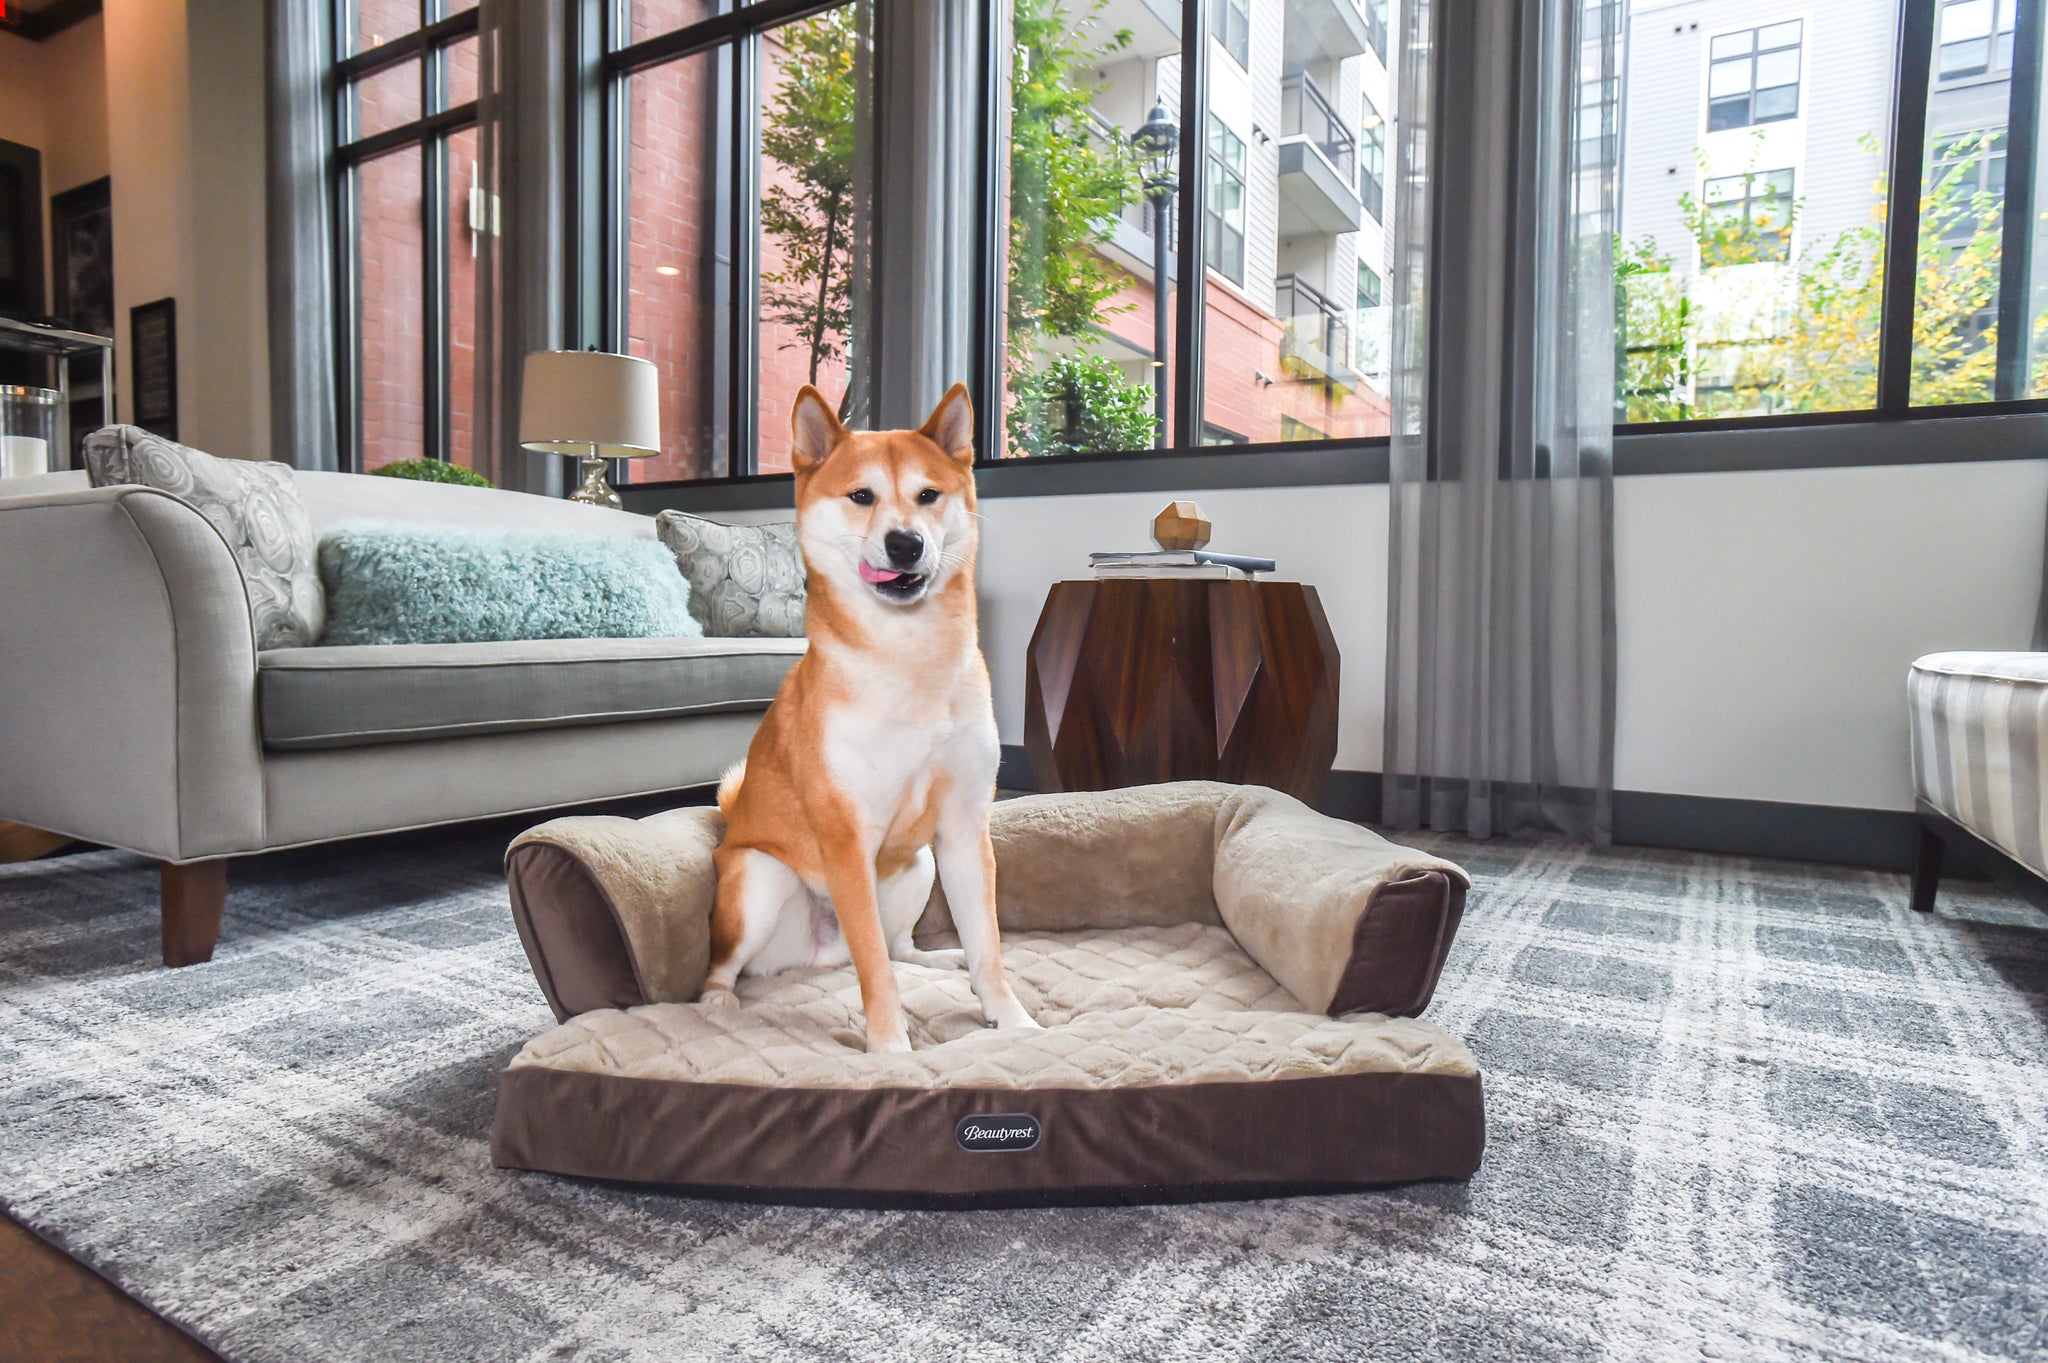 Luxury Bouclé Sofa Topper, Dog Beds